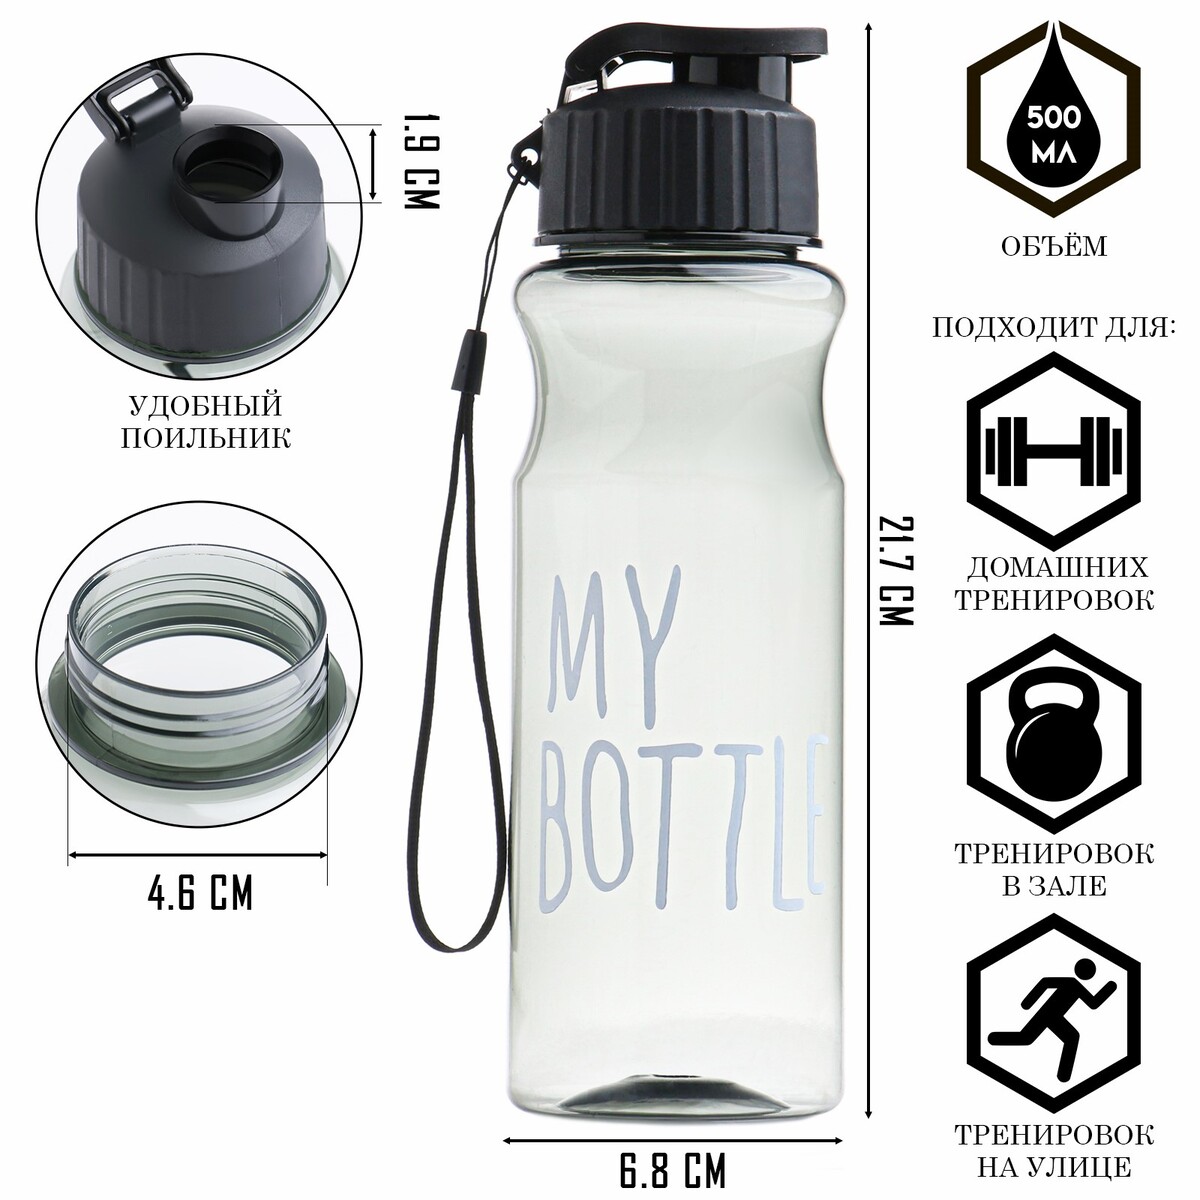 Бутылка для воды, 500 мл, my bottle бутылка для воды 500 мл my bottle 19 5 х 6 см микс